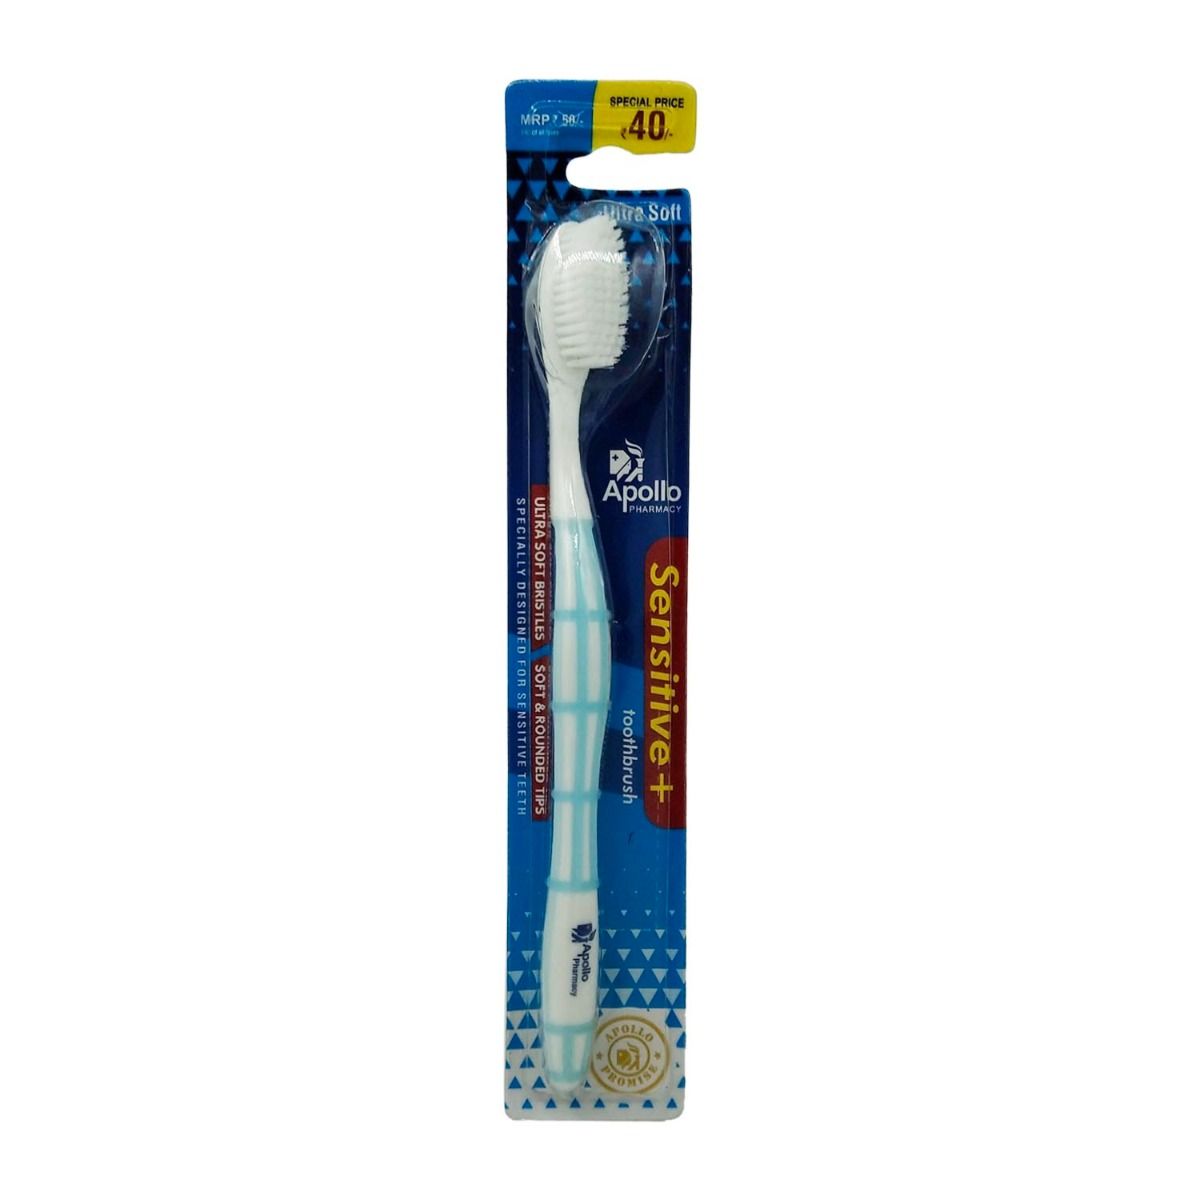 Buy Apollo Pharmacy Sensitive+ Toothbrush, 1 Count Online